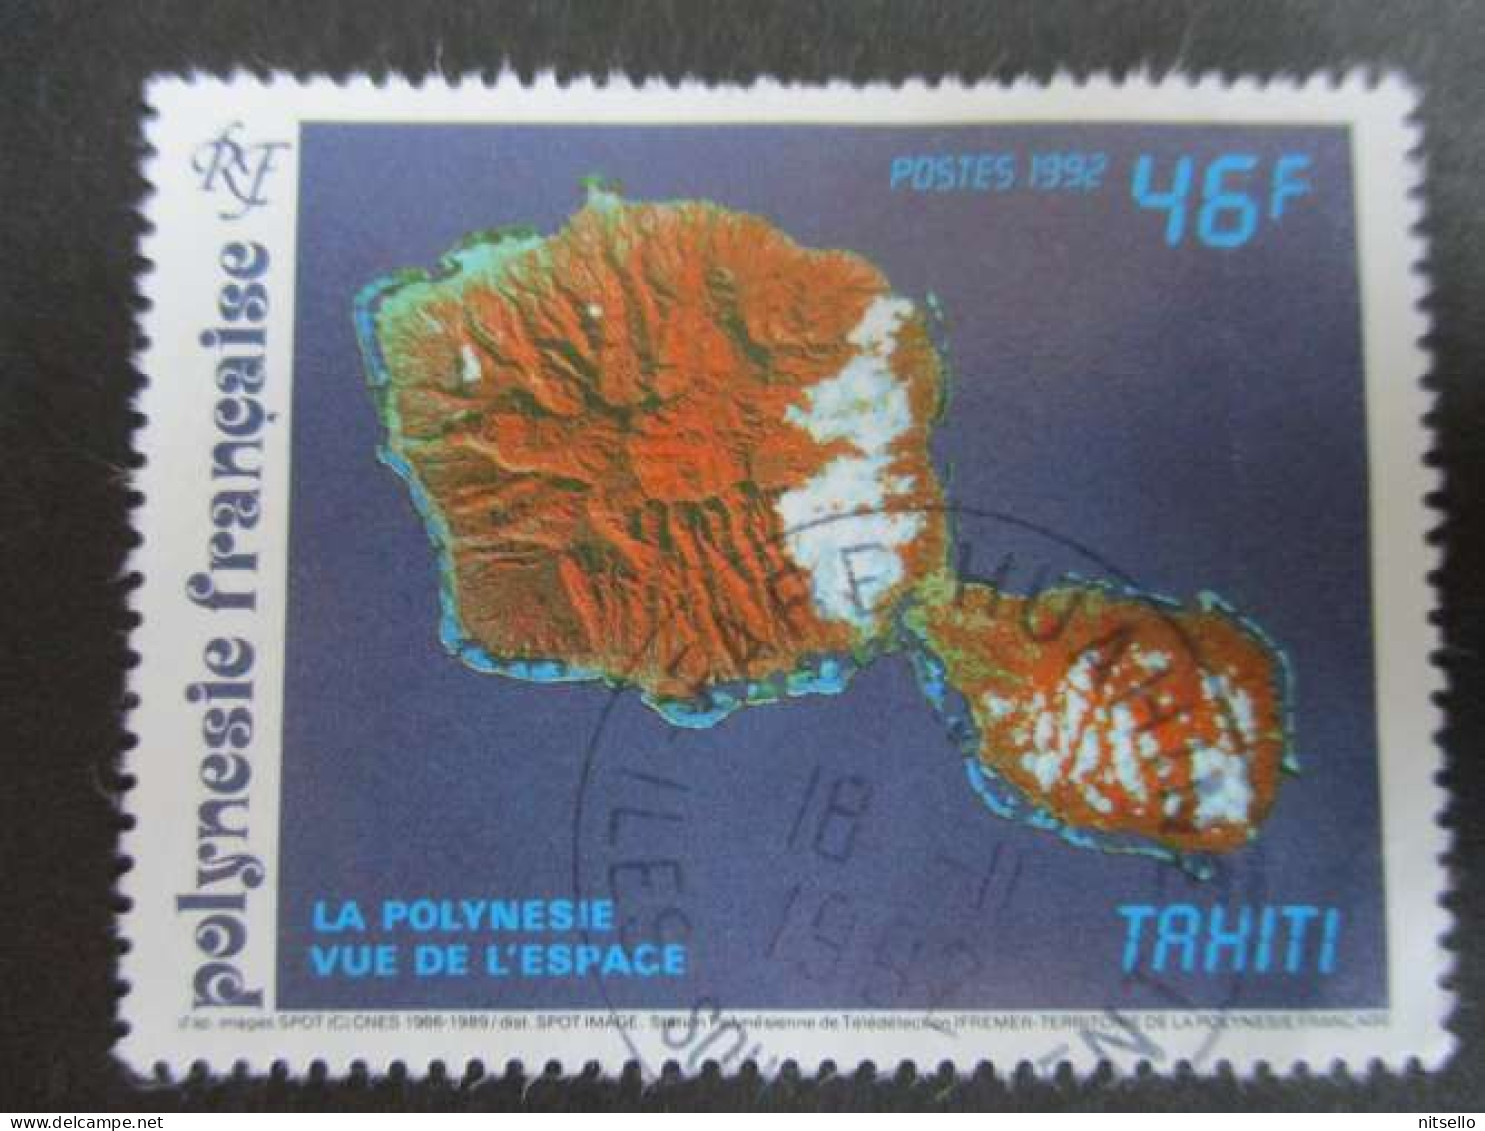 LOTE 2202B ///  (C025)  POLINESIA FRANCESA  - YVERT Nº: 405 OBL 1992  ¡¡¡ OFERTA - LIQUIDATION - JE LIQUIDE !!! - Used Stamps